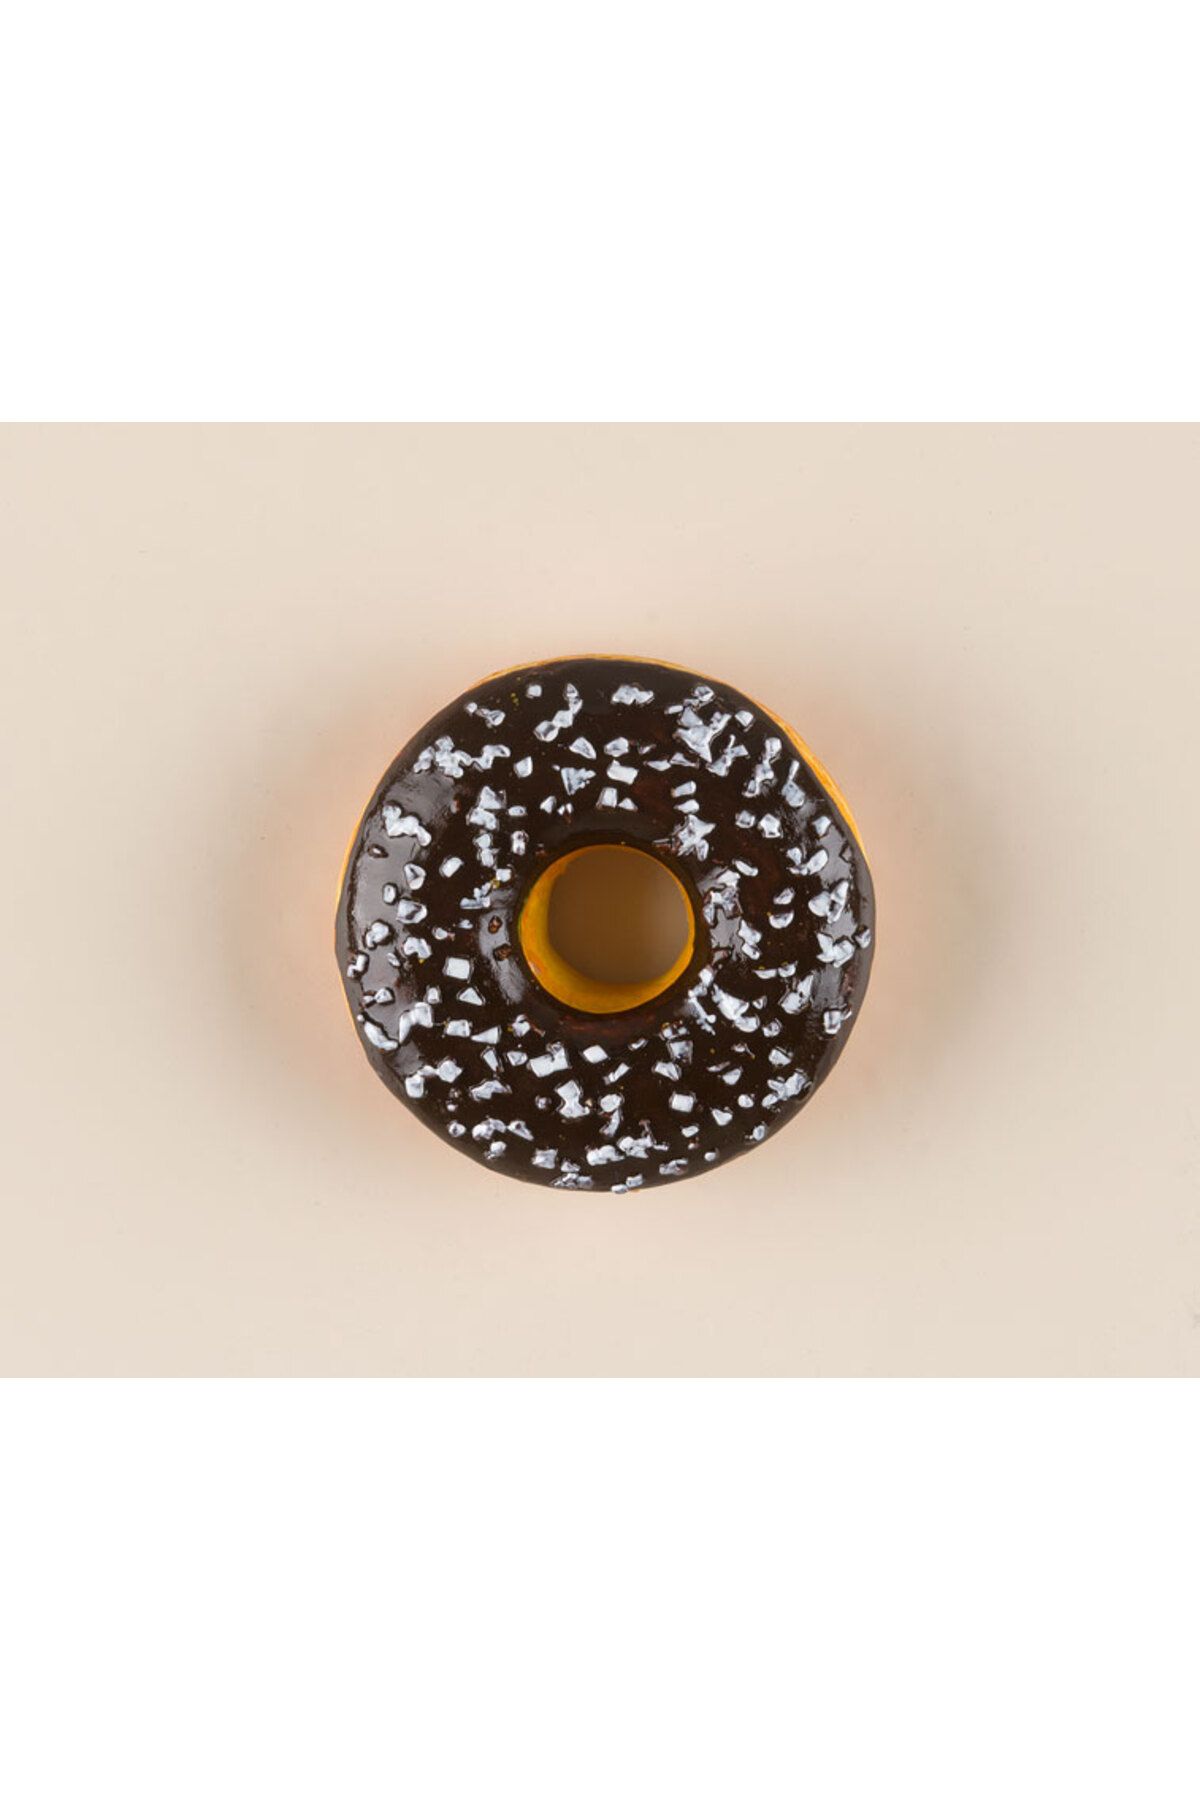 Madame Coco Donut Magnet 1 1KMGNT0048139.